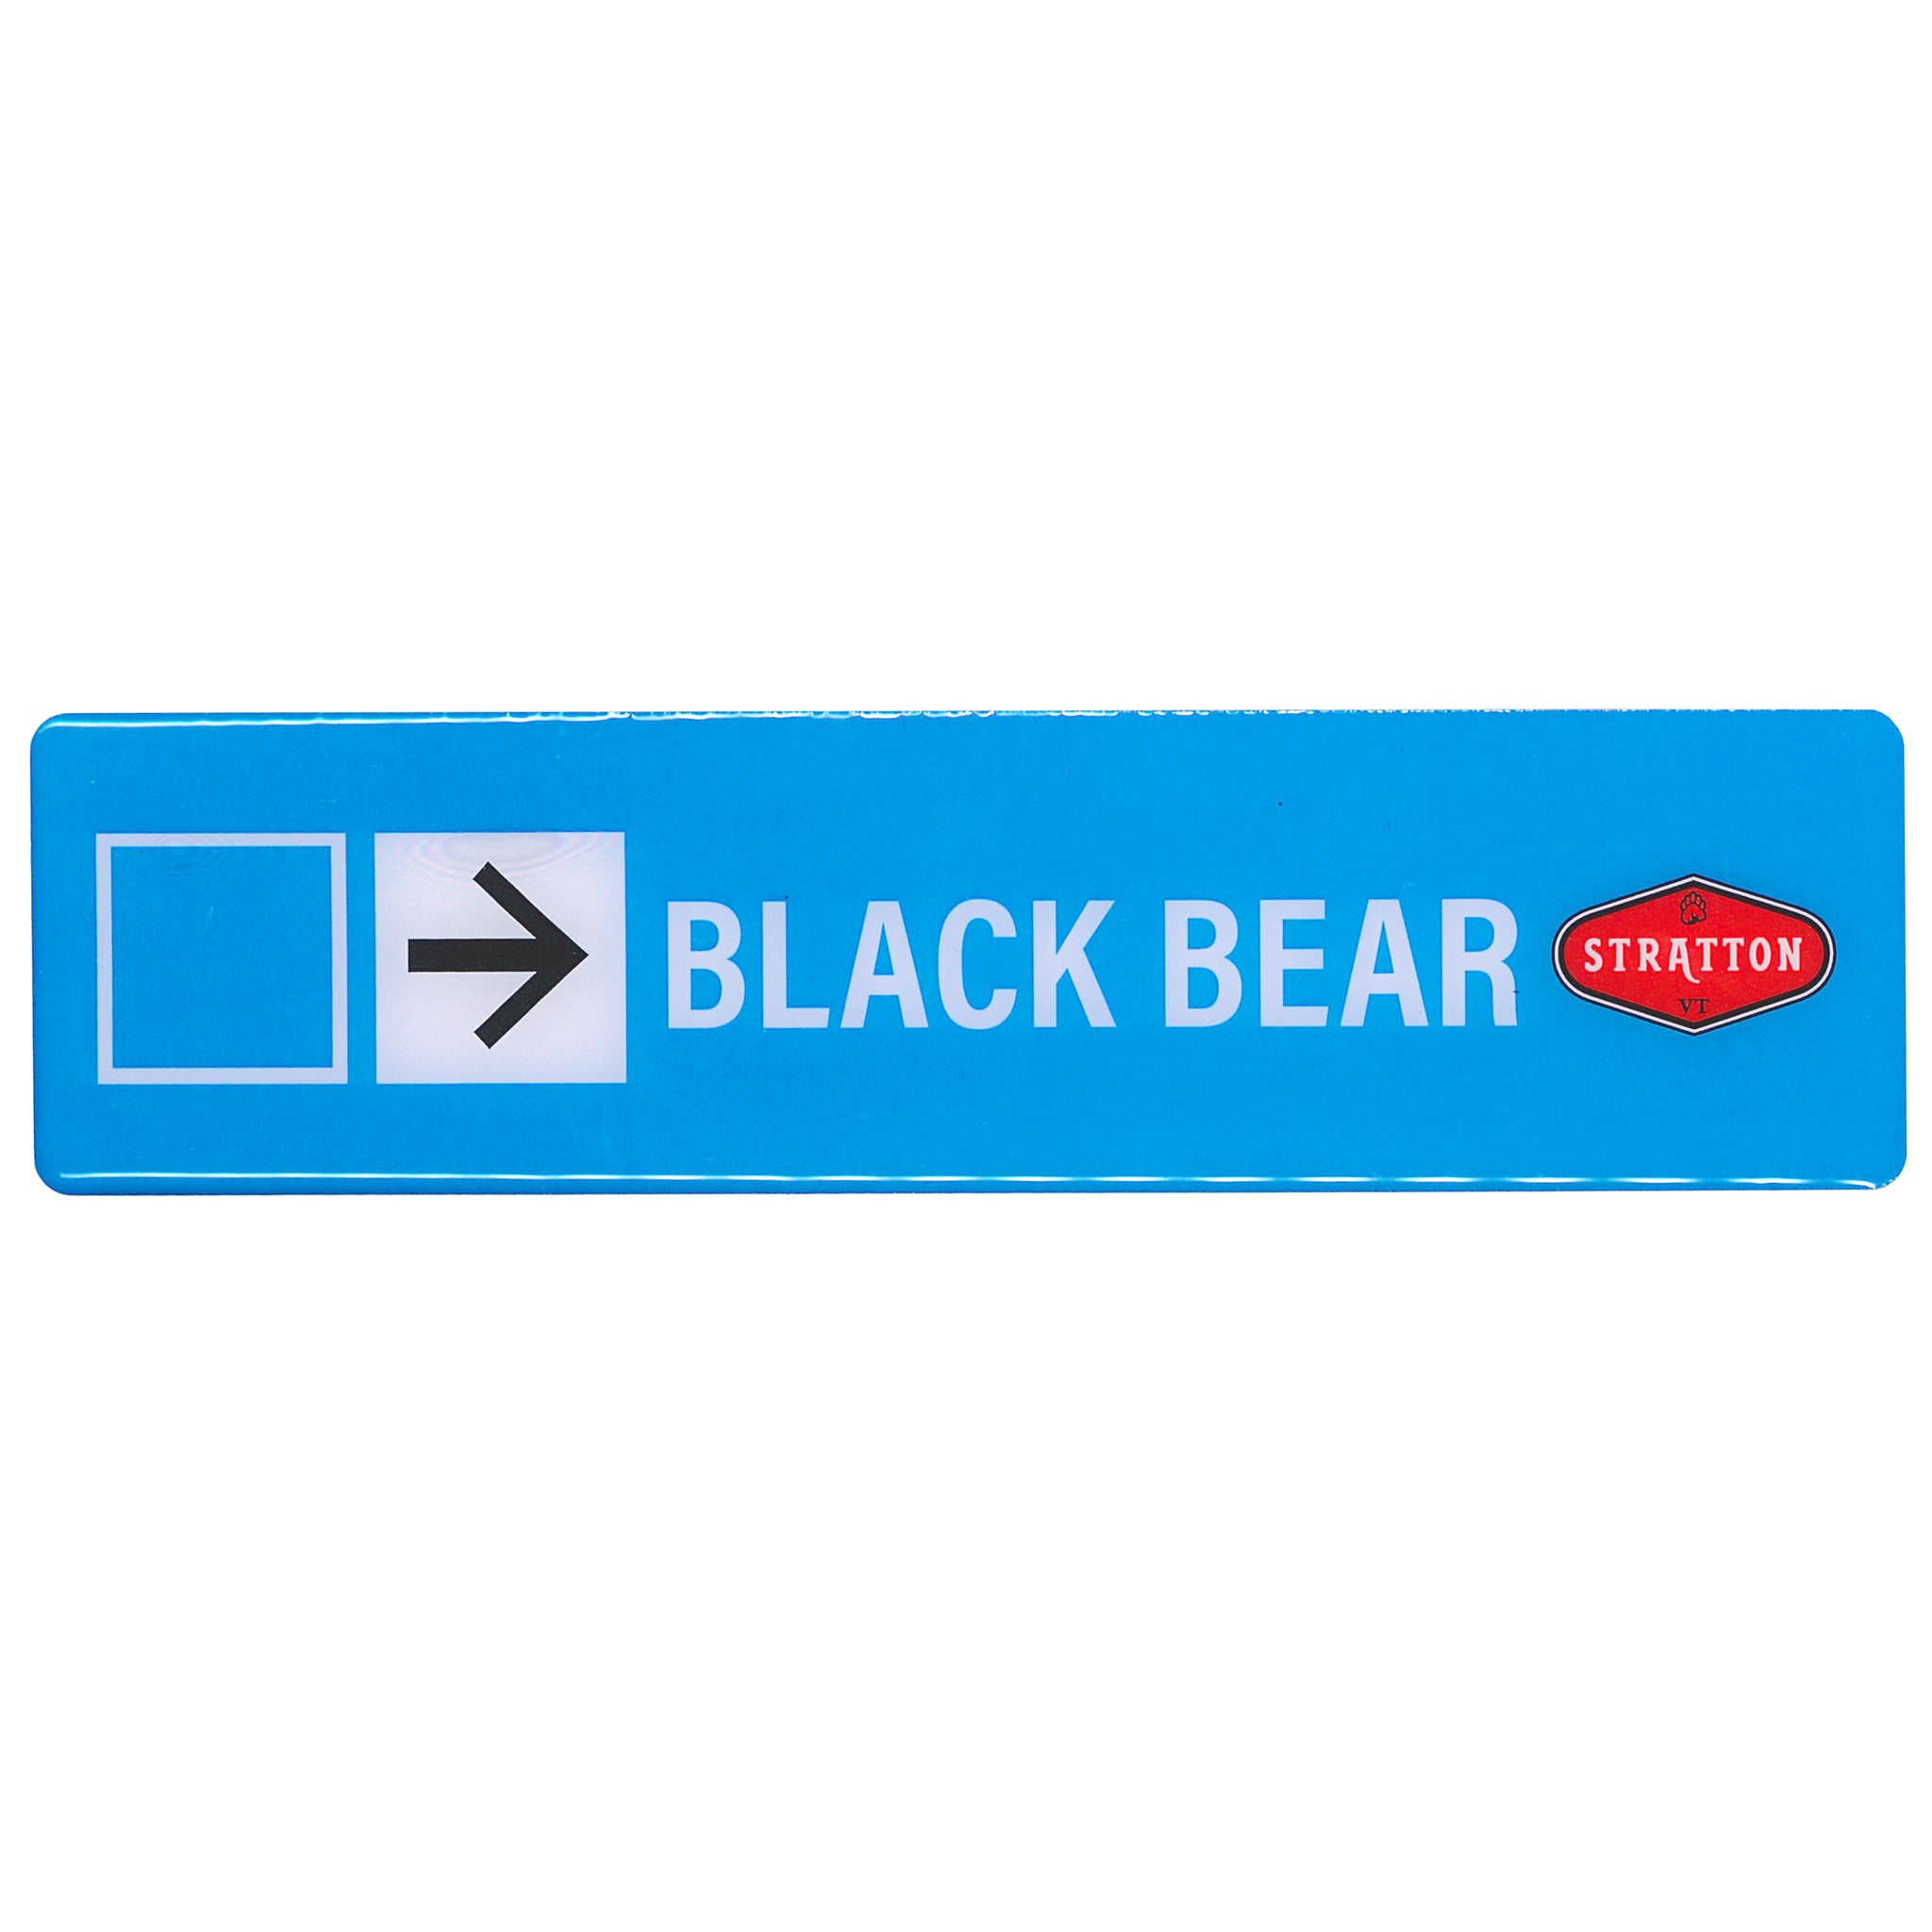 Stratton Black Bear Trail Sign Magnet